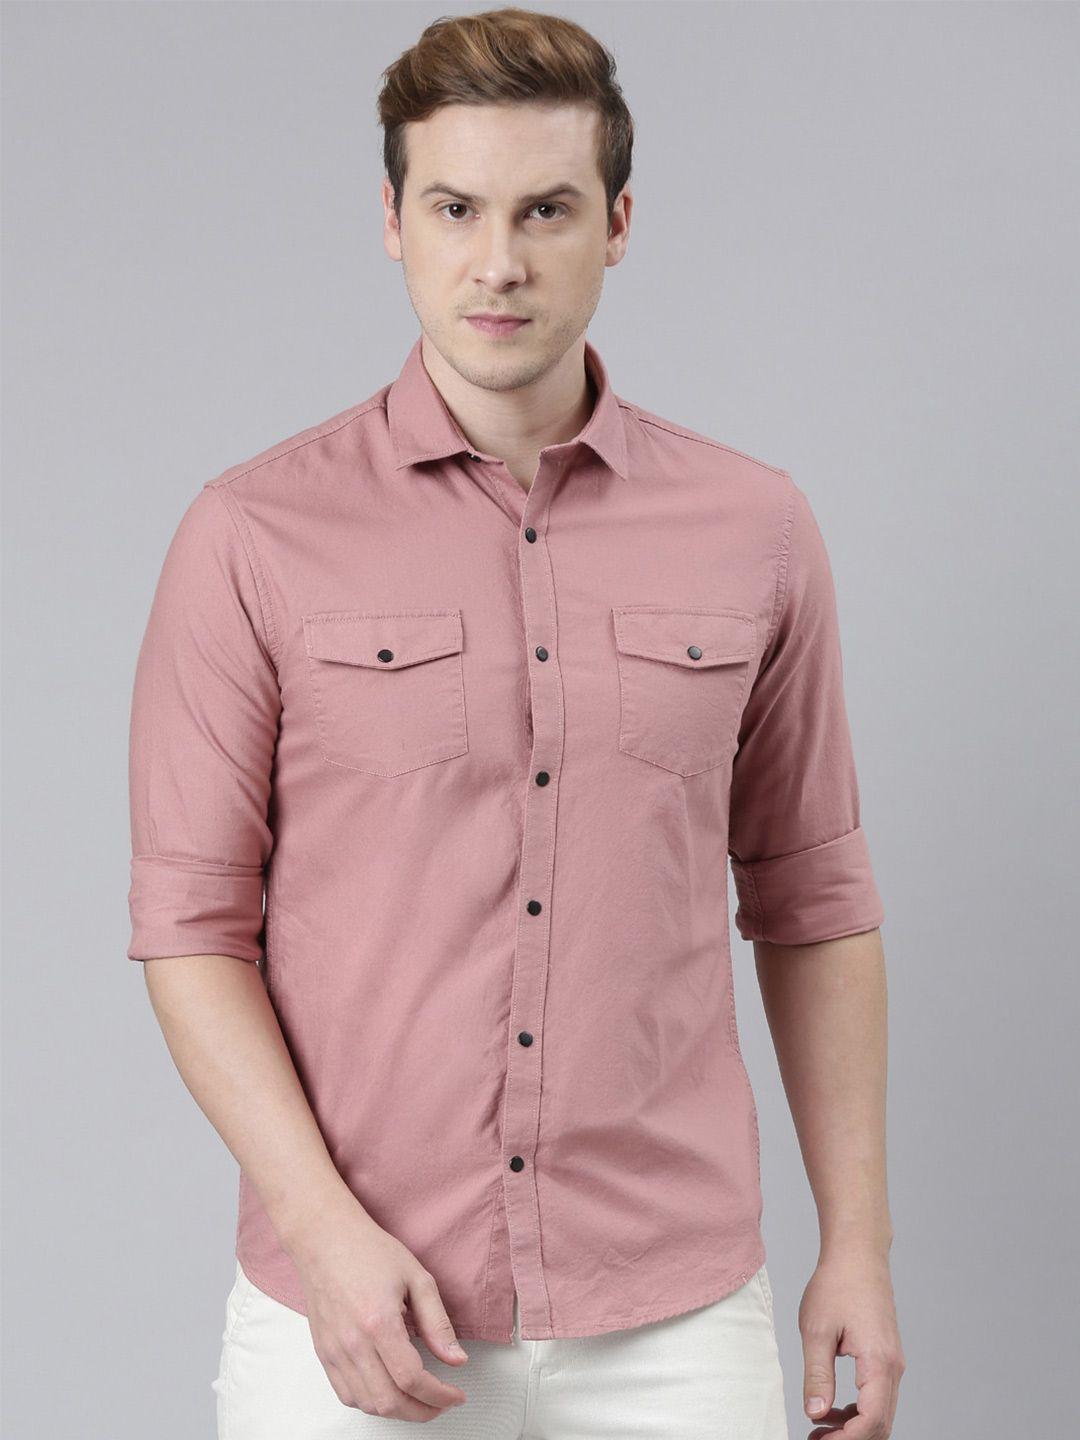 bushirt classic fit casual pure cotton shirt